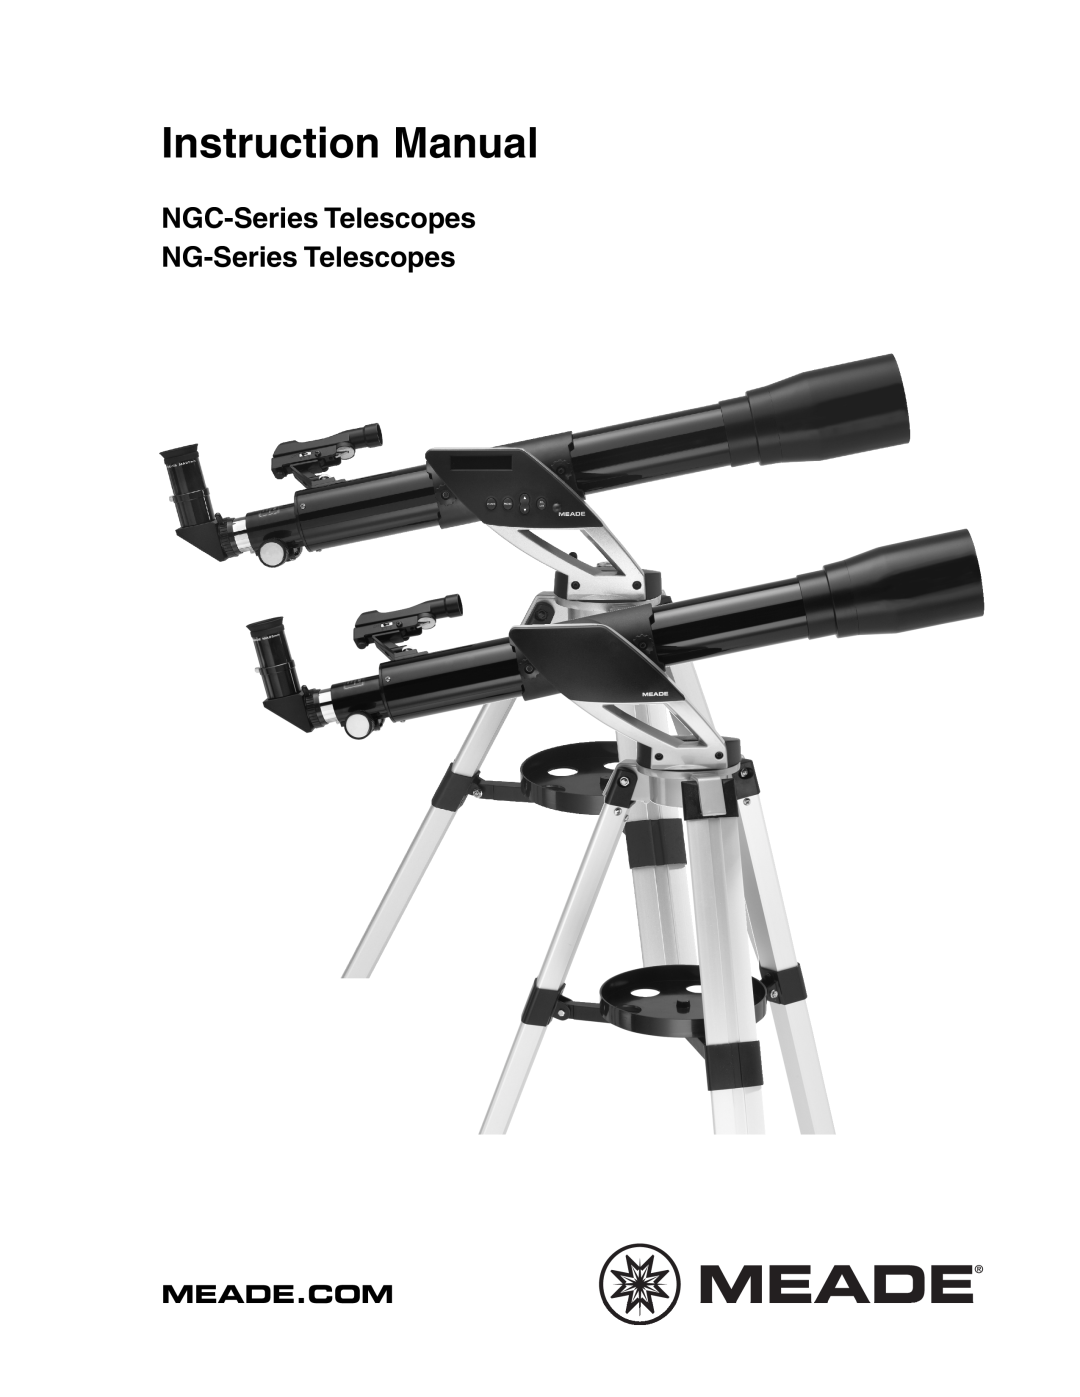 Meade instruction manual Meade.Com, NGC-Series Telescopes NG-Series Telescopes 